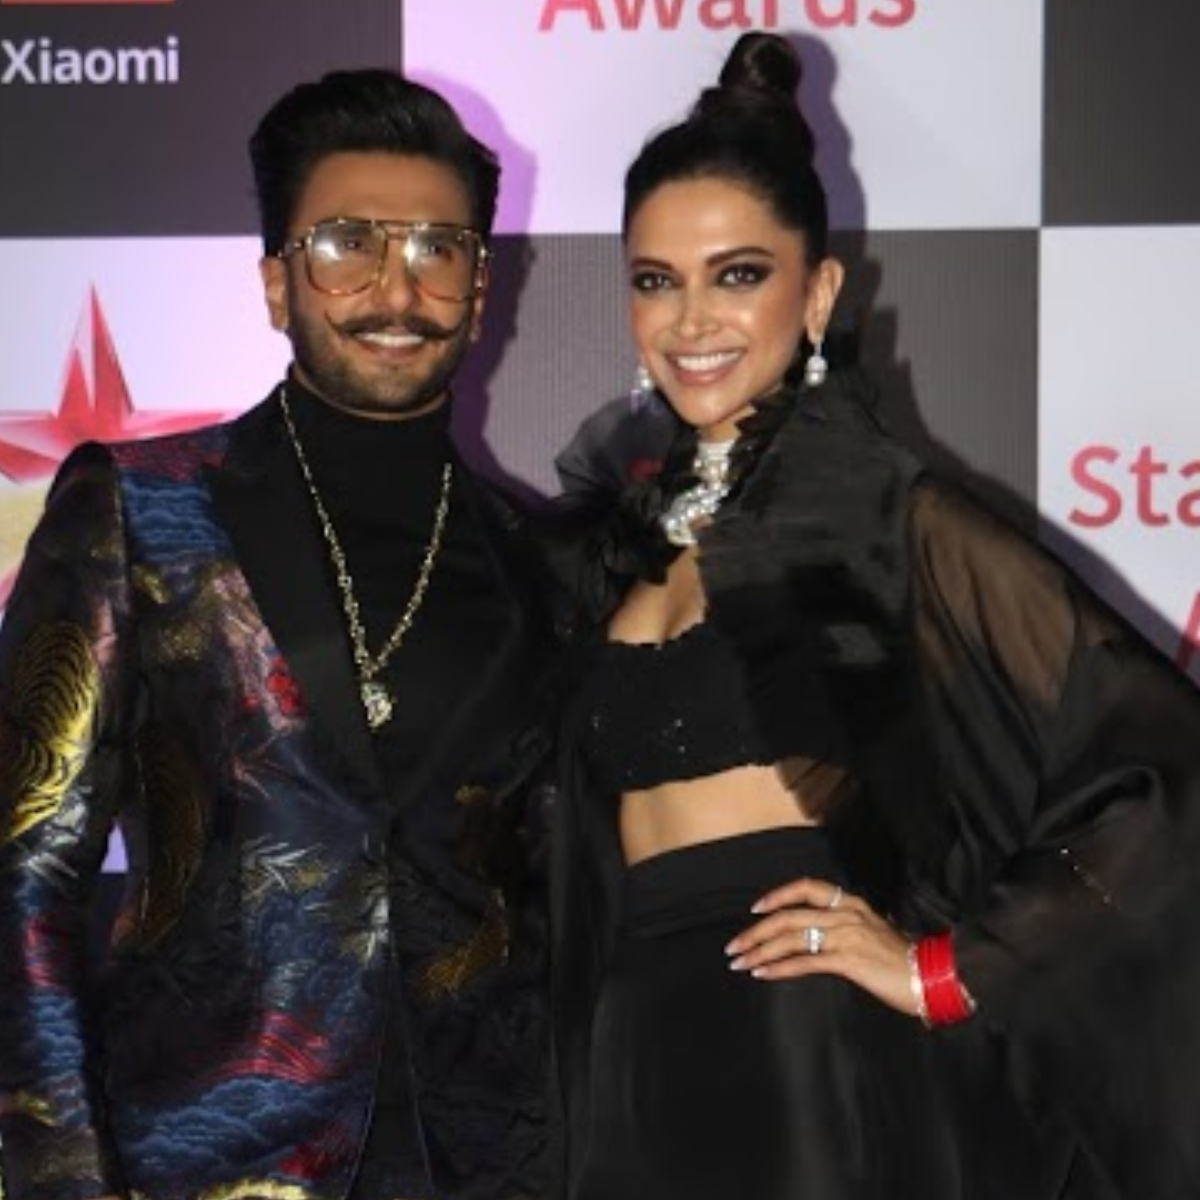 EXCLUSIVE: ‘Ranveer Singh & Deepika Padukone have a huge brand value’: Experts on the power couple